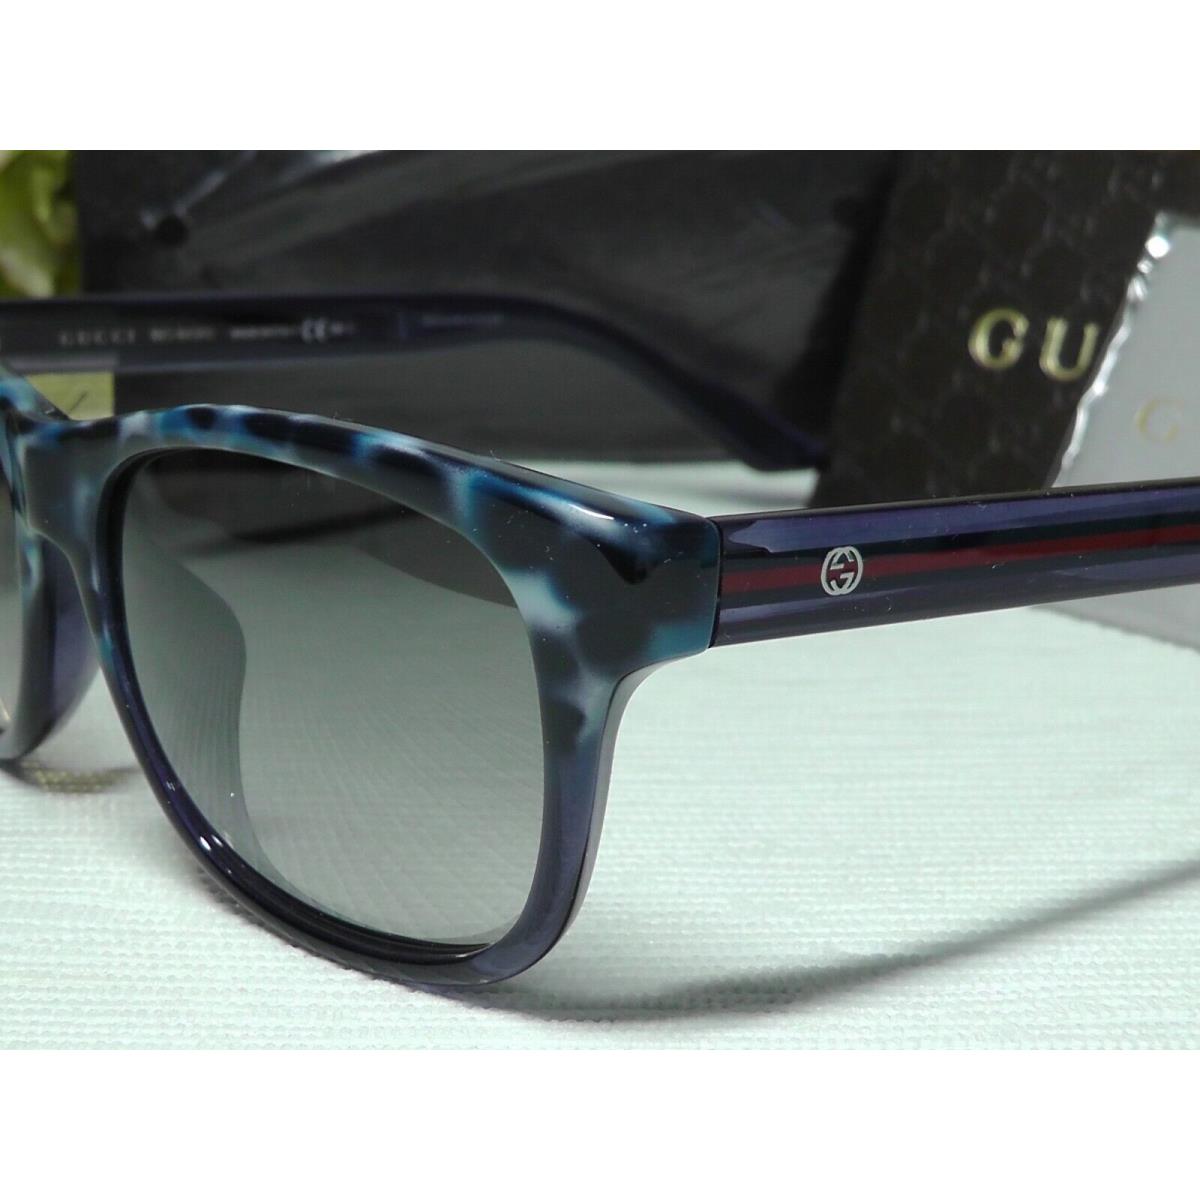 Gucci sunglasses  - Havana Blue Frame, Gray Lens 0